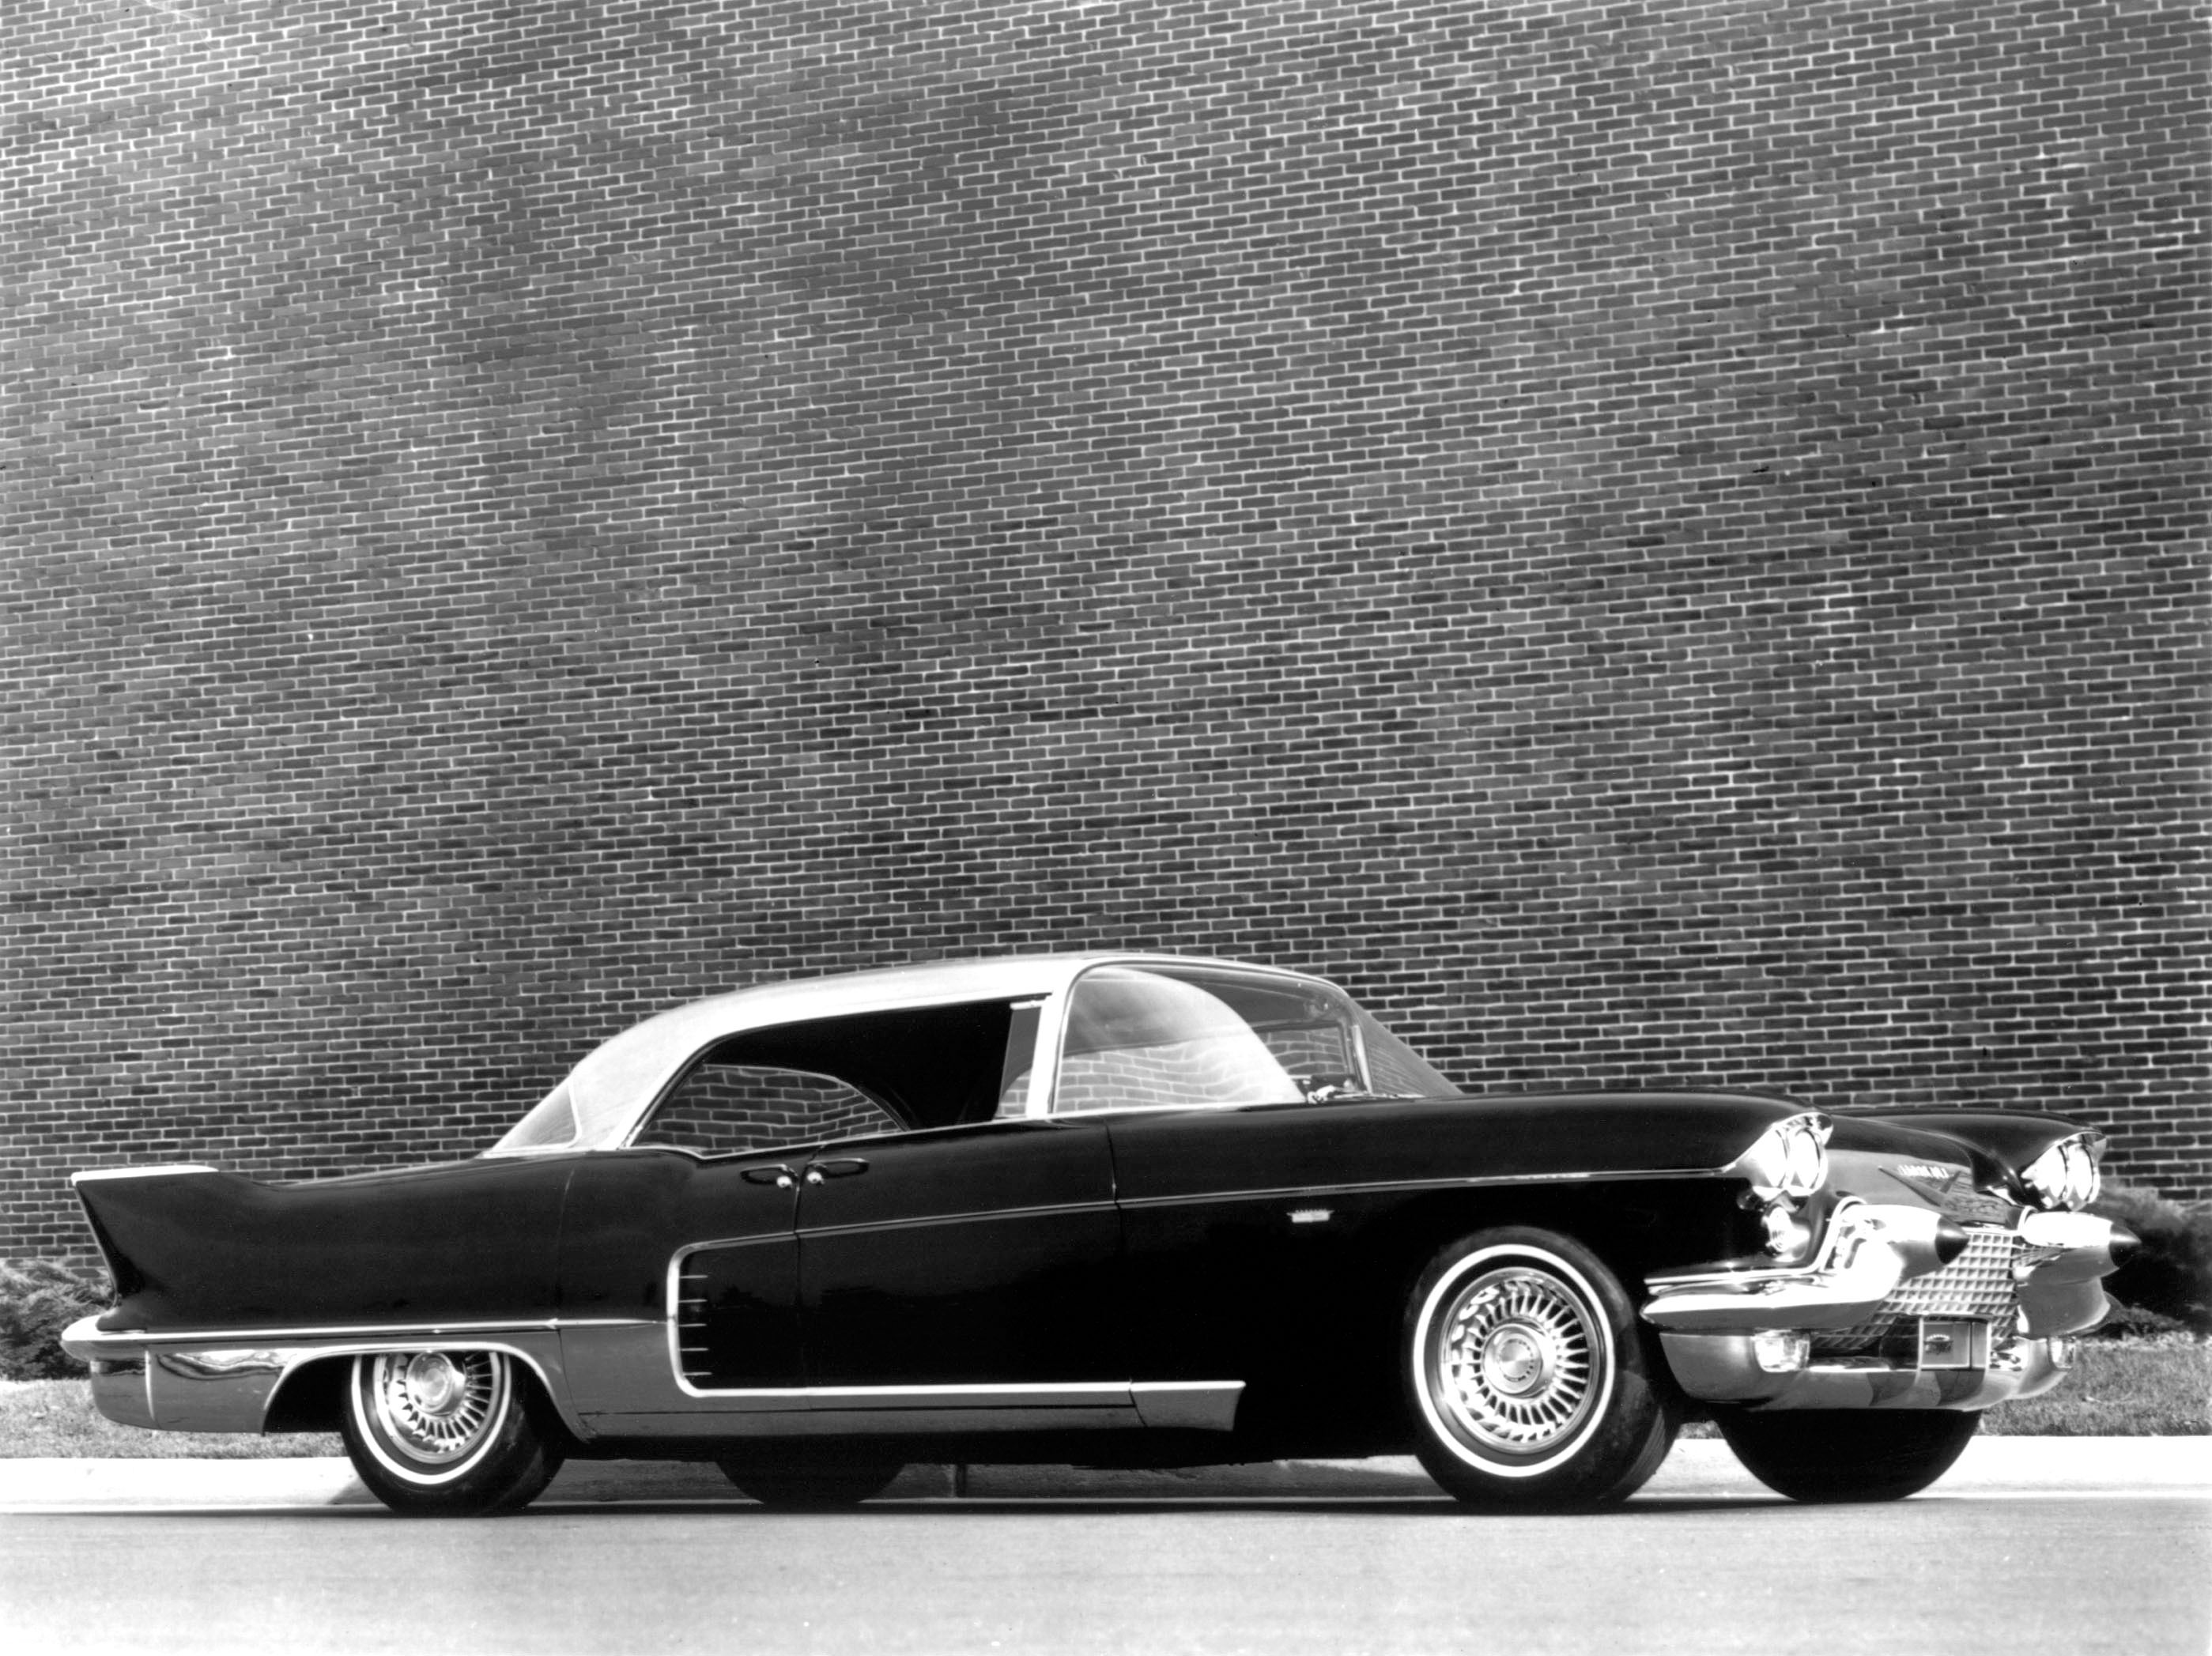 Amazing 1957 Cadillac Eldorado Brougham Pictures & Backgrounds